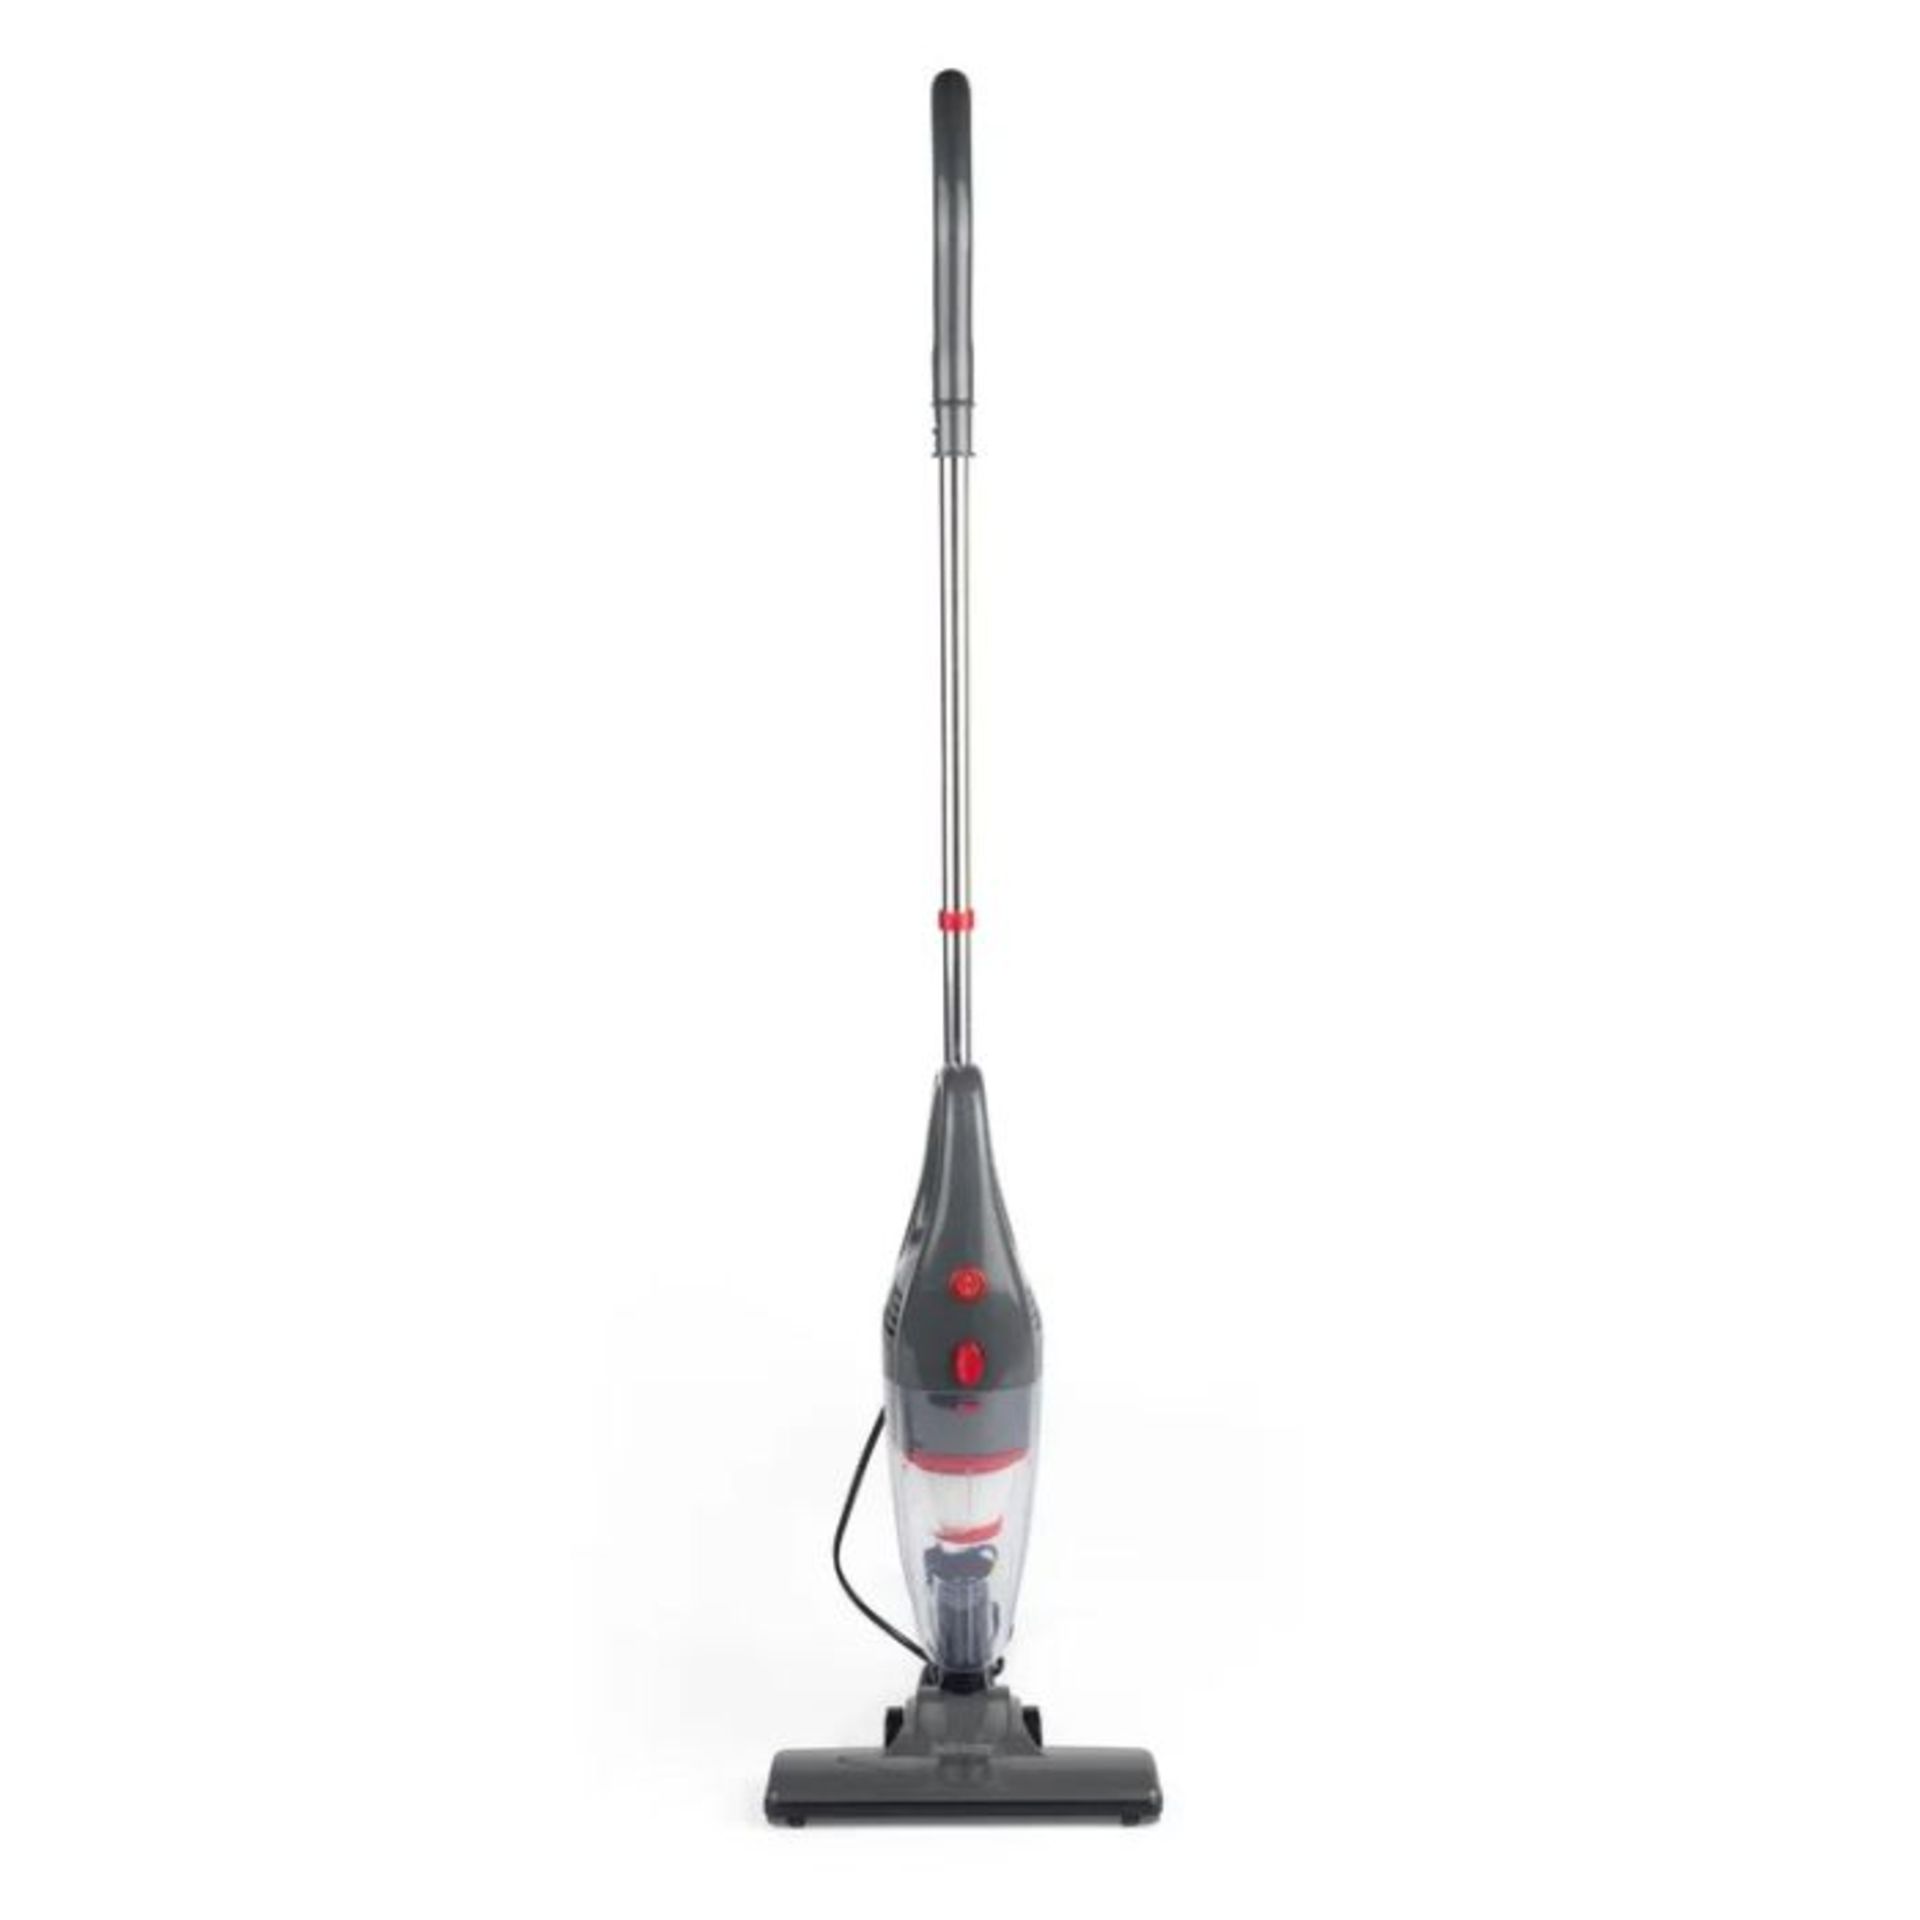 Beldray, Beldray Stick Vacuum Cleaner (GREY FINISH) (RETURN, NOT CHCKED) (BLRY1211 - 28500)